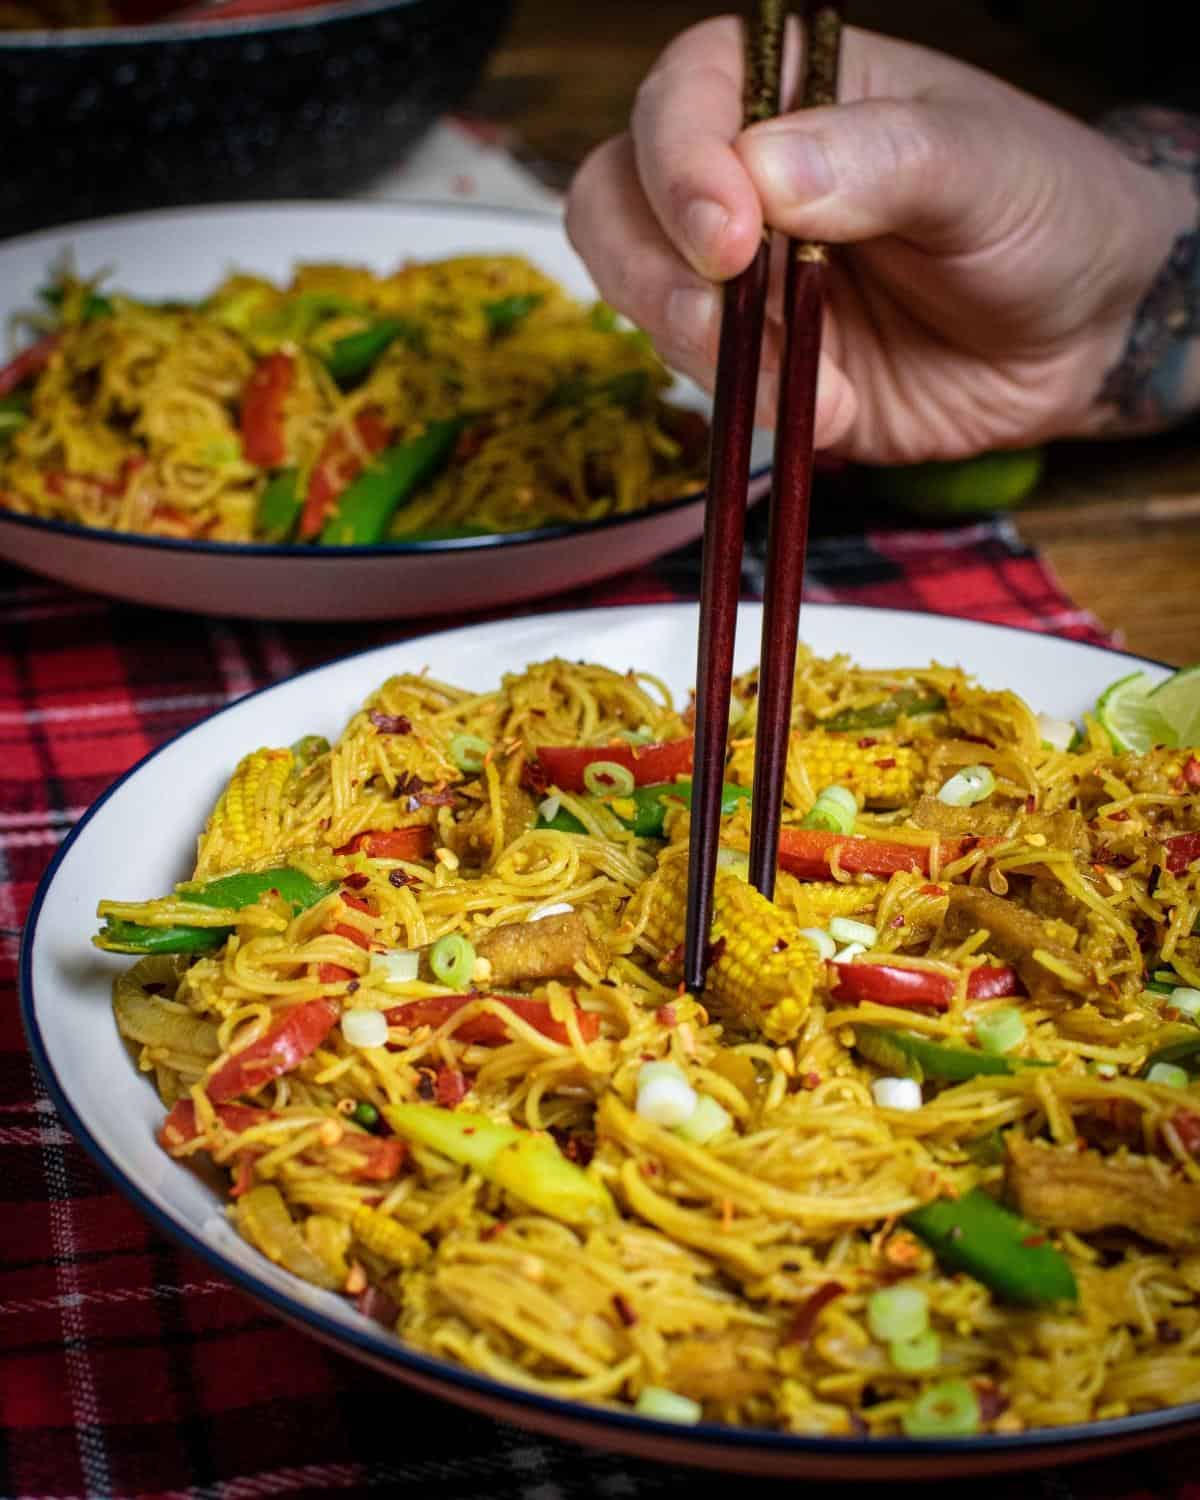 Tofu Singapore noodles on a plate with a hand holding chopsticks.